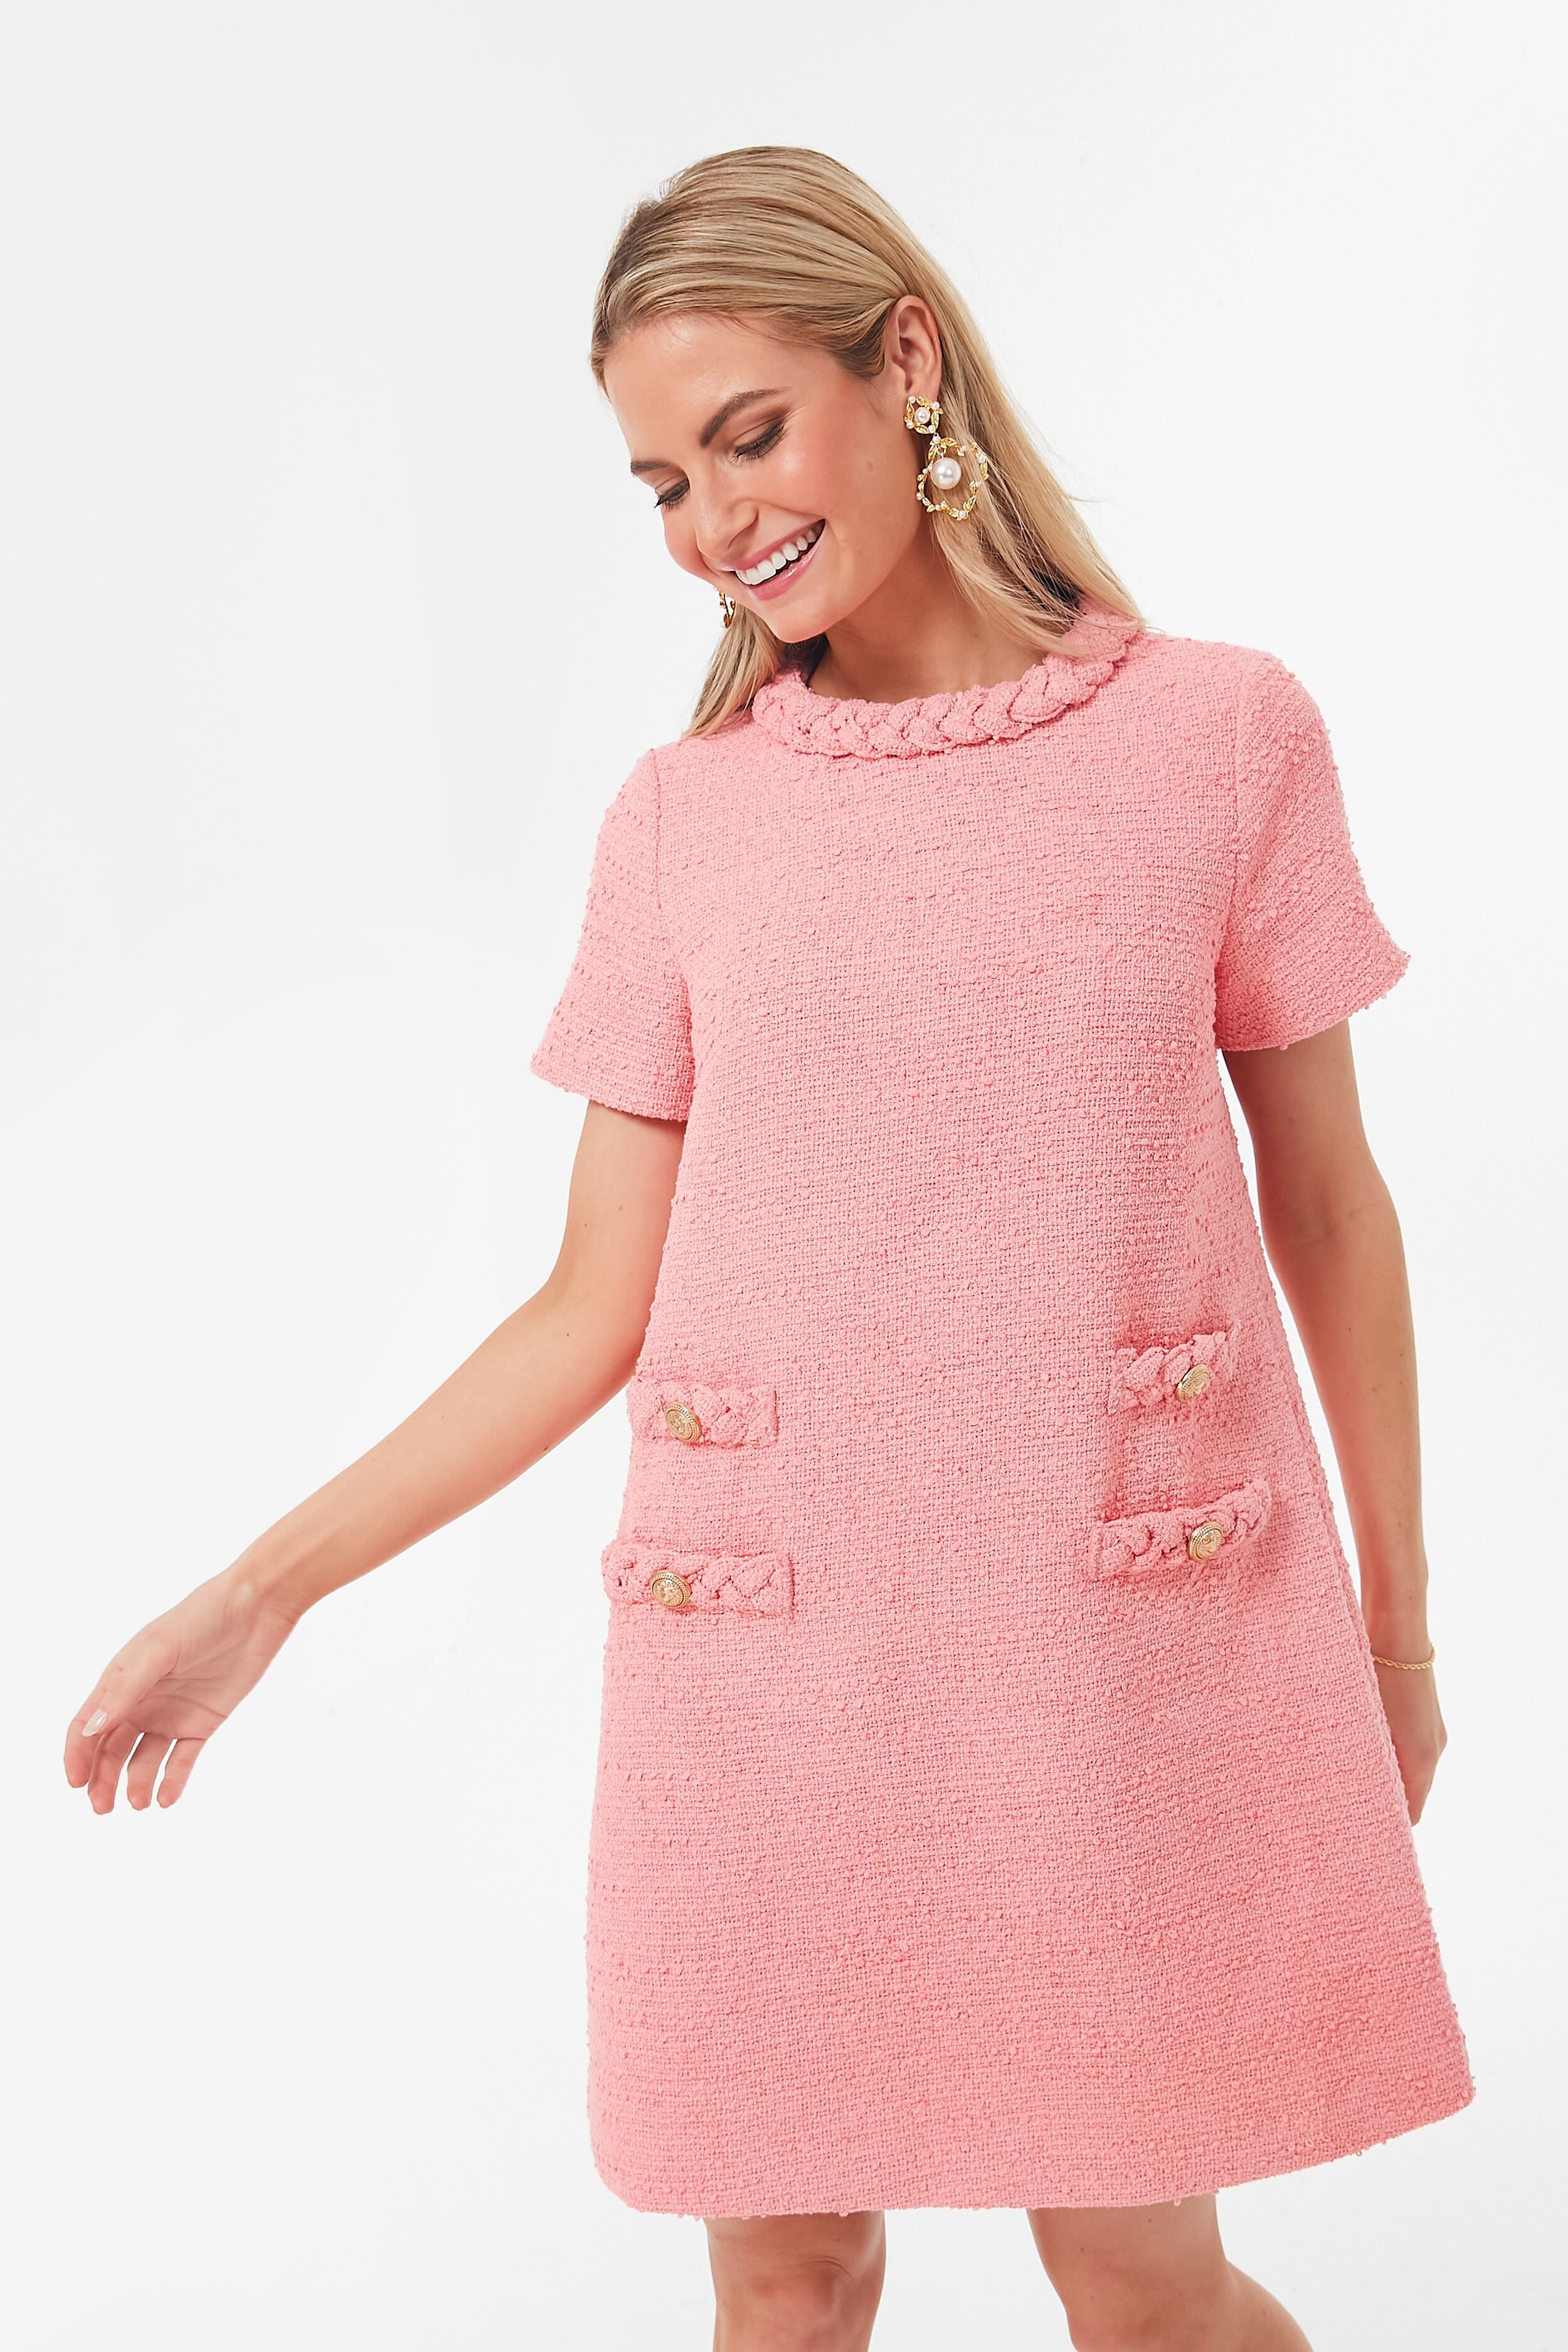 Bar T Boutique LLC Timeless Tweed Buttoned Dress - Light Pink Large